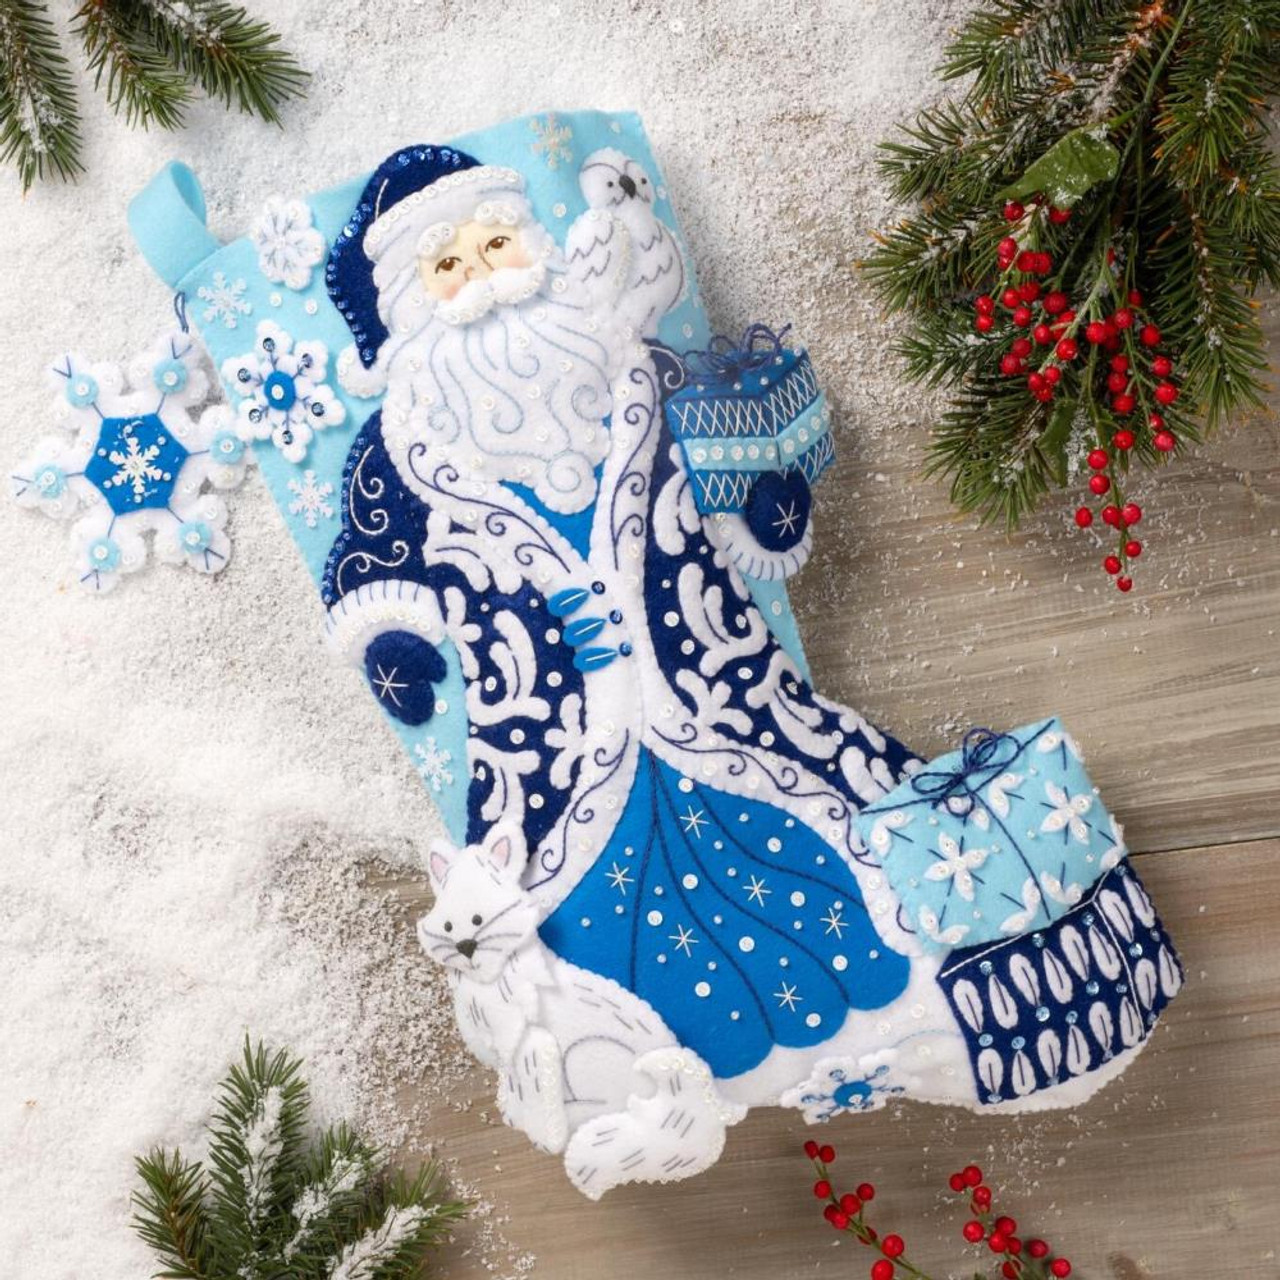 Bucilla Felt Applique Stocking Kit, Arctic Santa & Friends